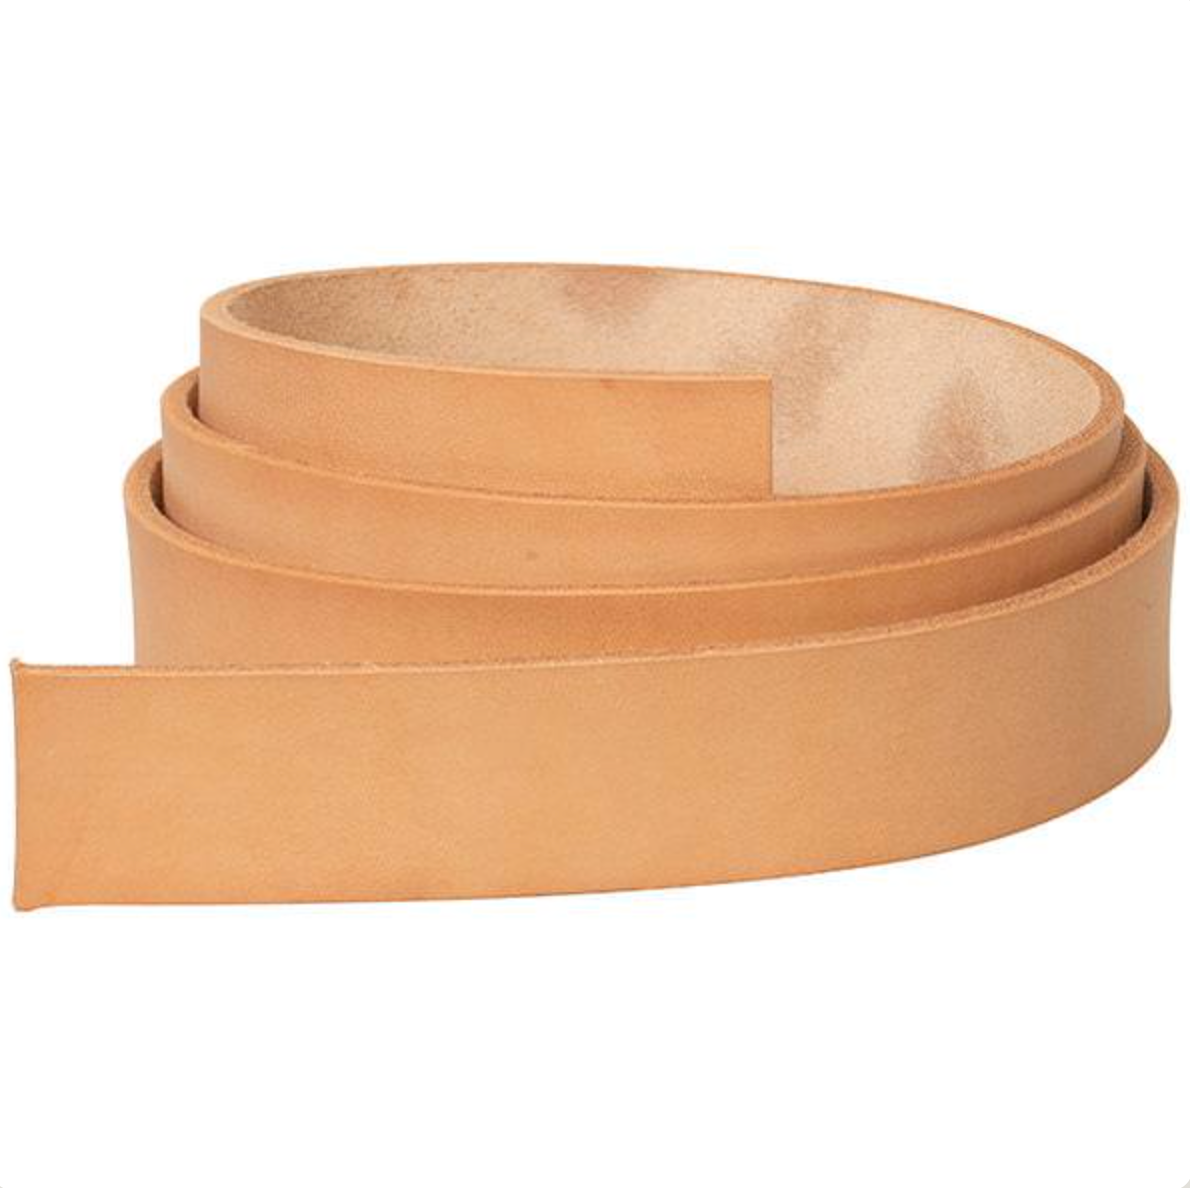 ELW Leather Blank Belt, 10-11 Oz. (4-4.4mm) Thickness